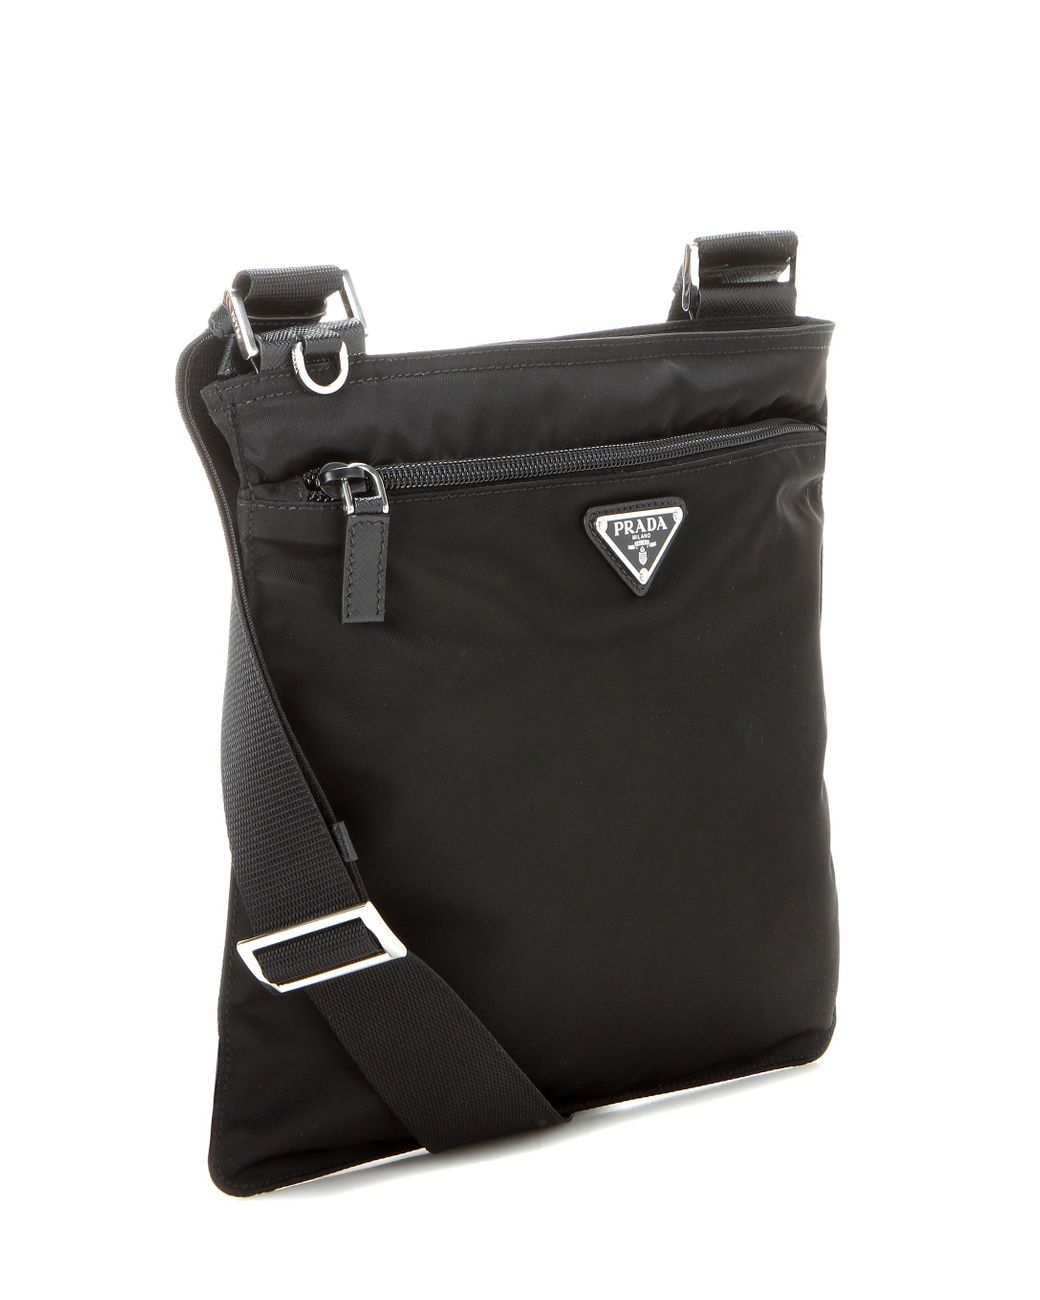 Prada Nylon Crossbody Bag in Black | Lyst